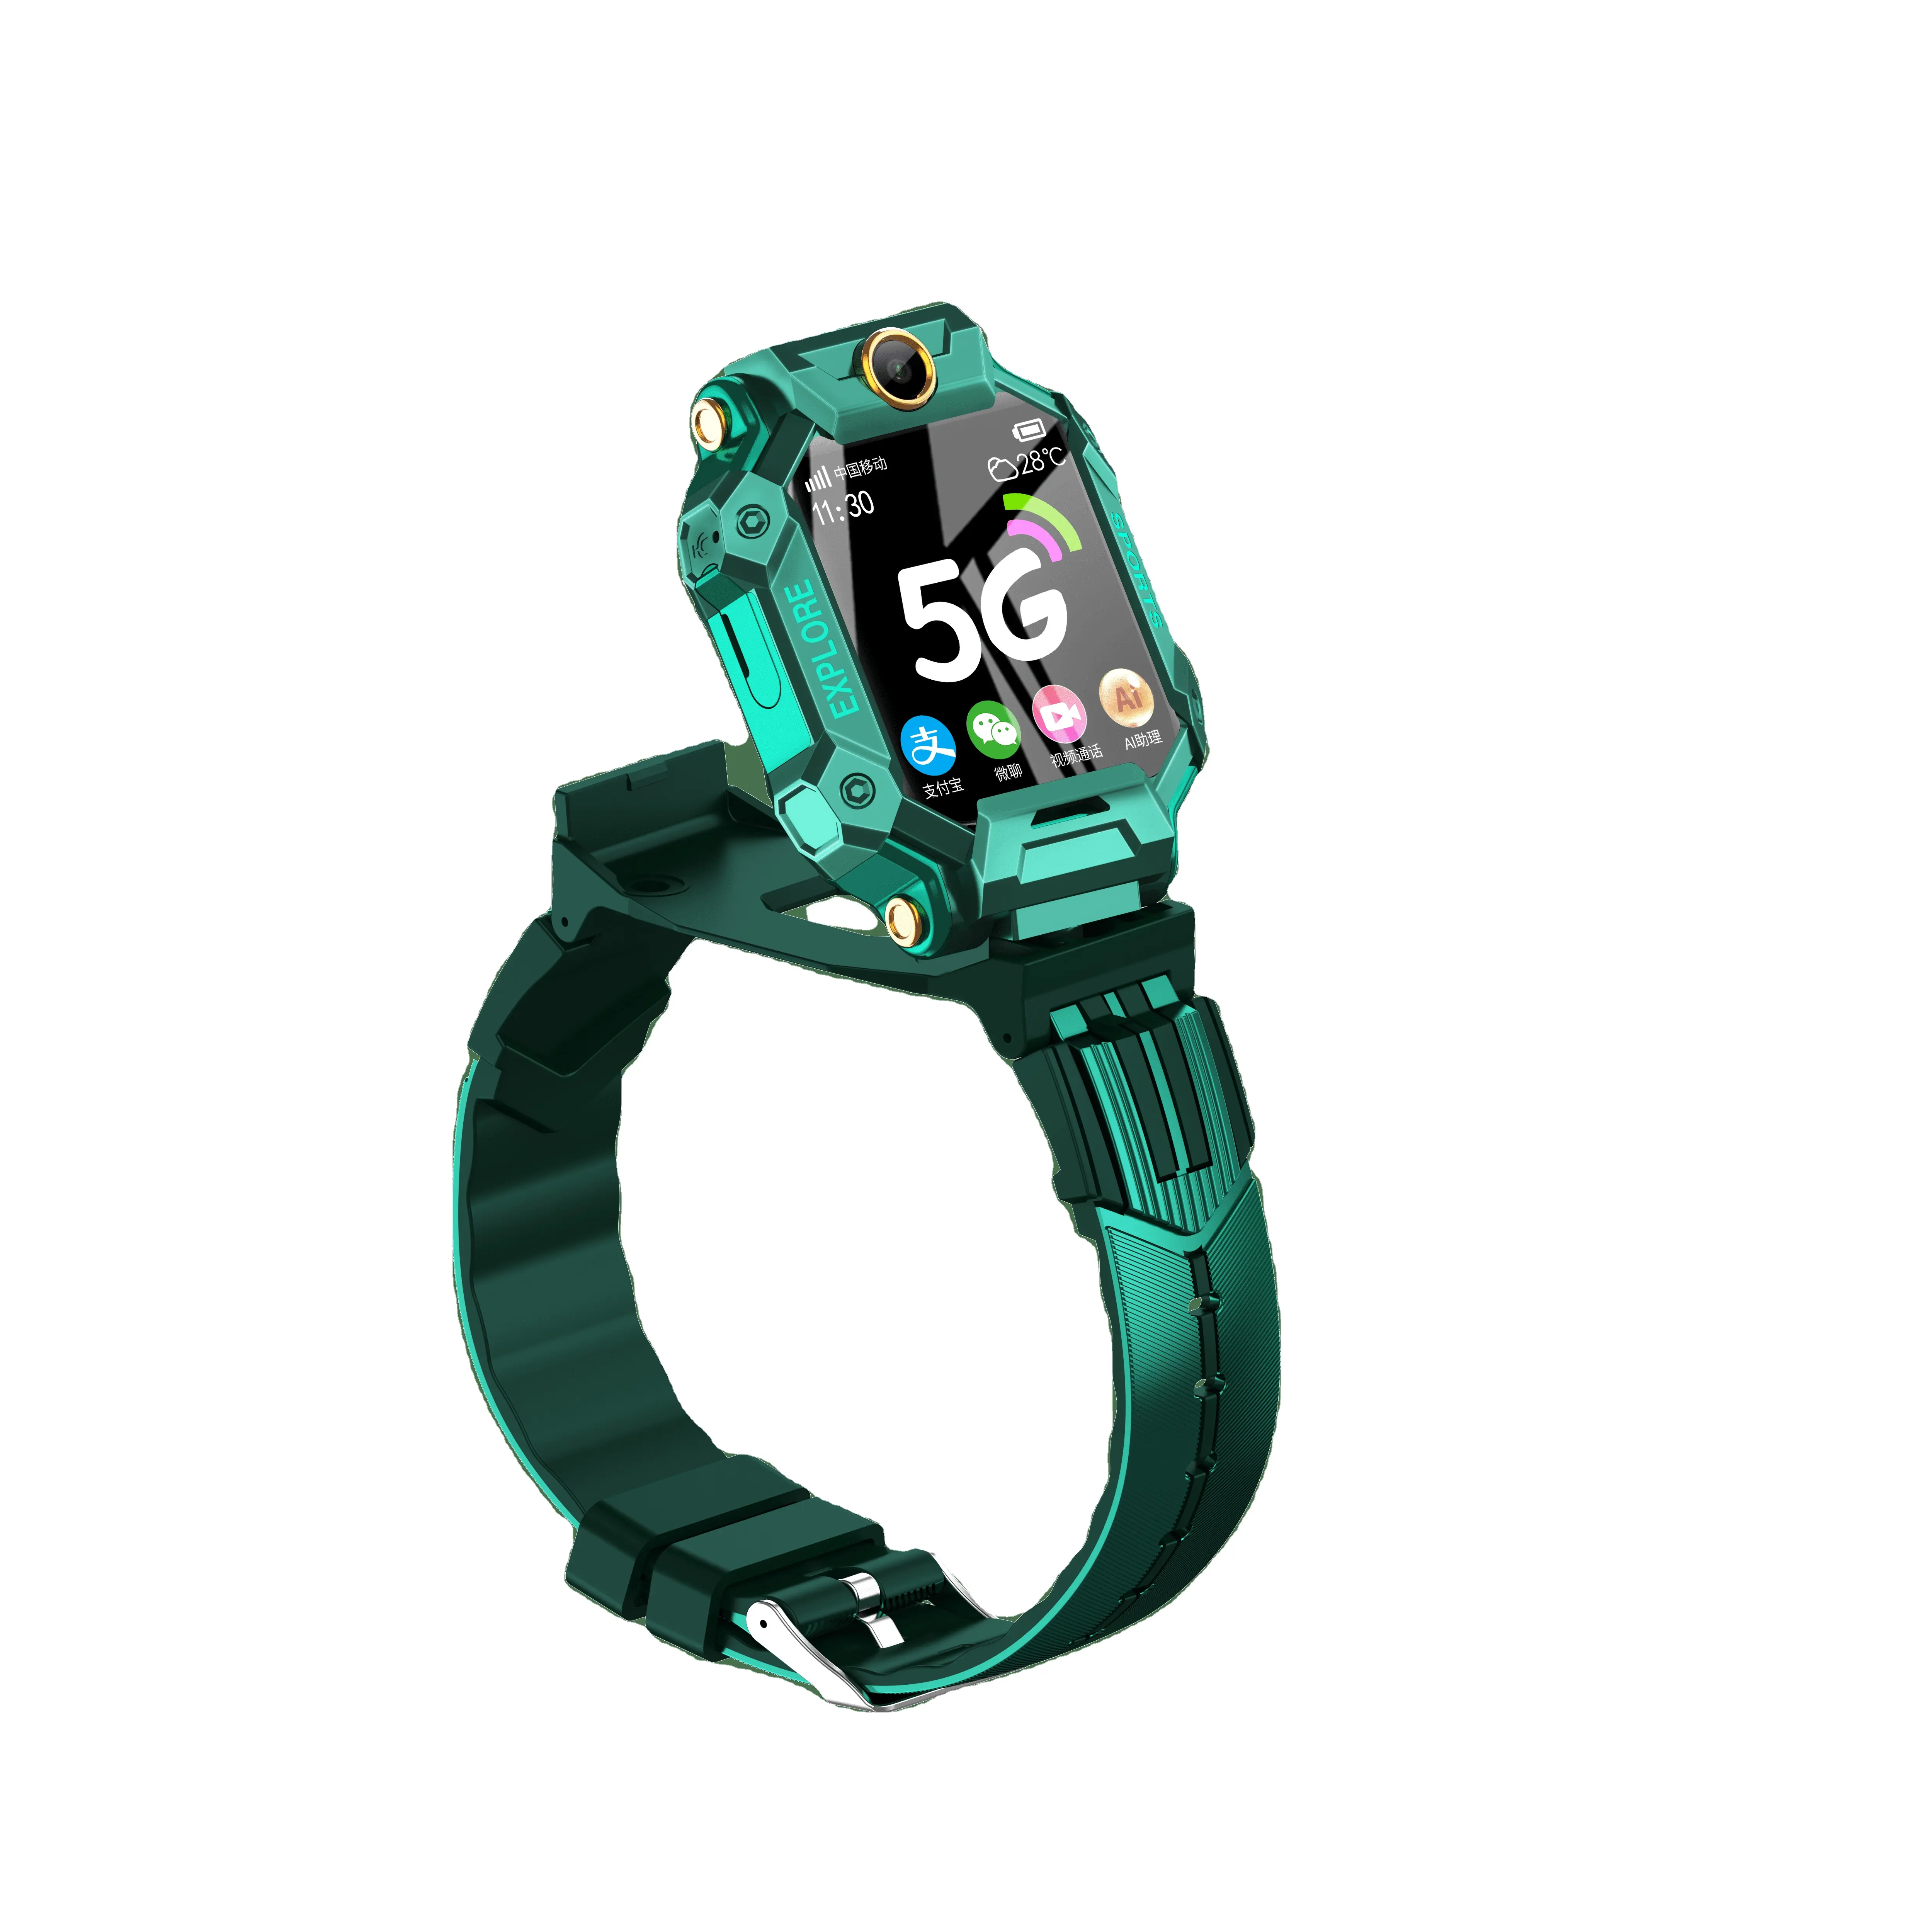 Vendite Z8 Q19 Kids Smart Watch Rohs Ce 5g Gps Smart Watch Sim Card SOS Video Call Message Smartwatch per ragazzi e ragazze